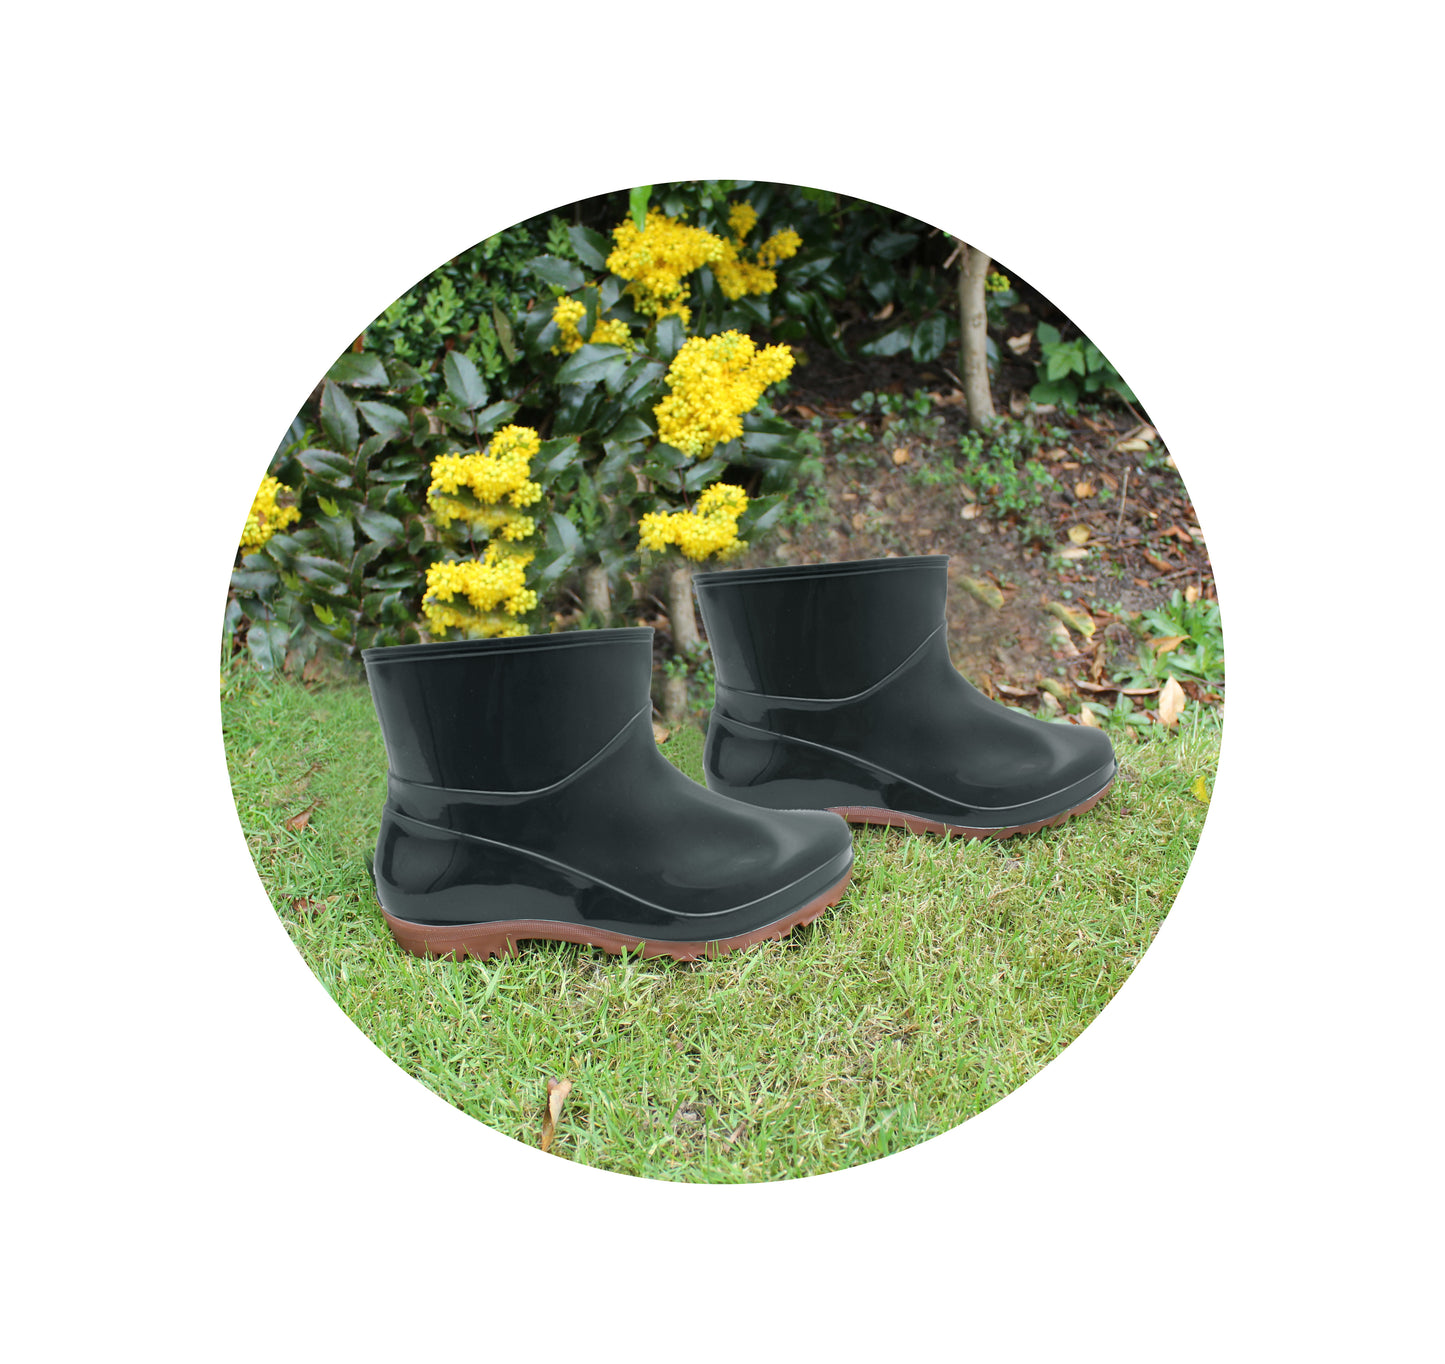 Womens Black Tan Ankle Wellies Short Rain Boot Waterproof Snow Ladies Outdoor Dog Walking Festival Gardening Low Cut Wellington Boots